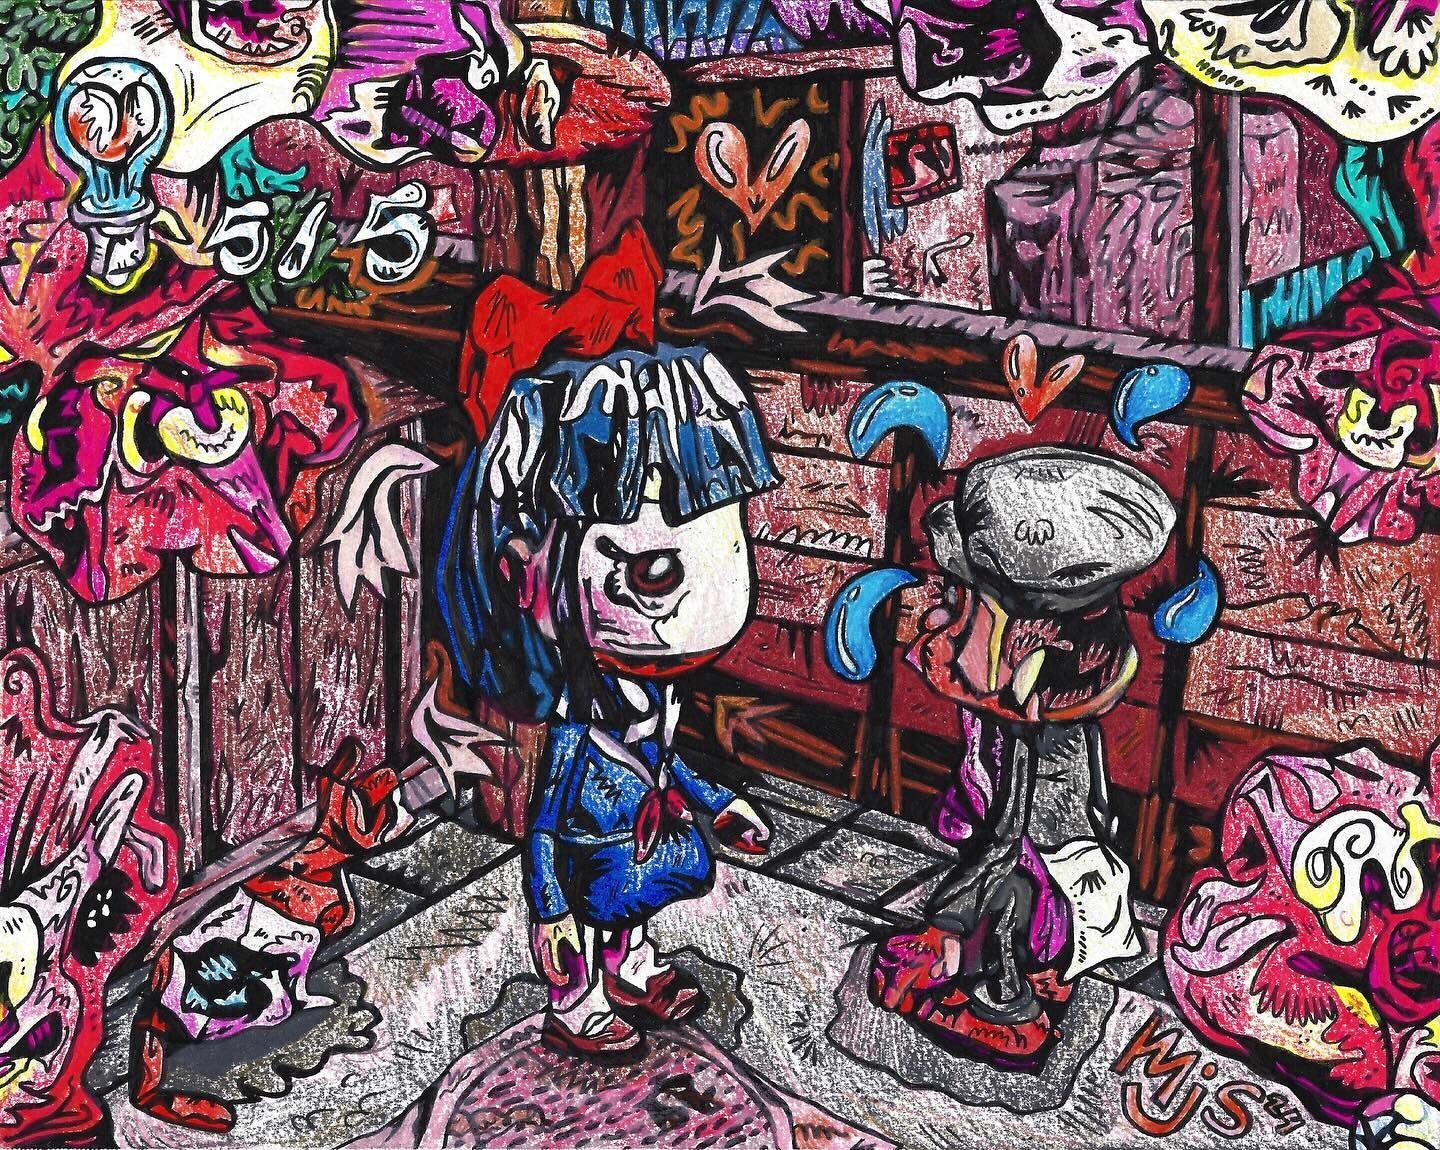 🎄&rsquo;23 / 5: Chulip 
-
-
-
#coloredpencil #gaming #color #chulip #oldgames #art #artist #playstation #japaneseart #artistsoninstagram #cartoon #japan #illustration #illustrator #artwork #lineart #ink #inkdrawing #digitalart #newmediaart #gift #ga